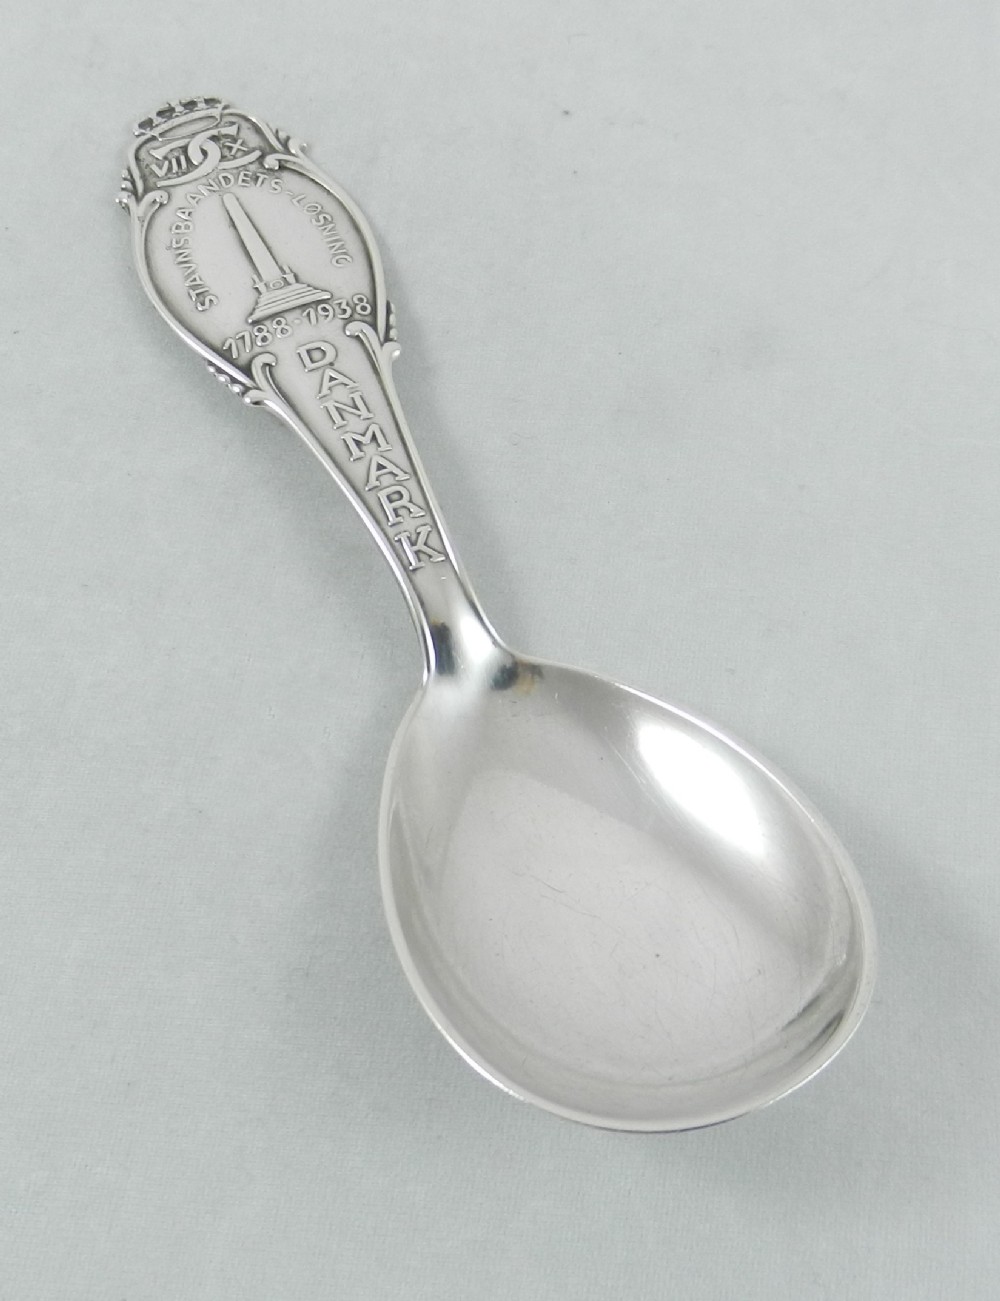 silver stavnsbaand caddy spoon